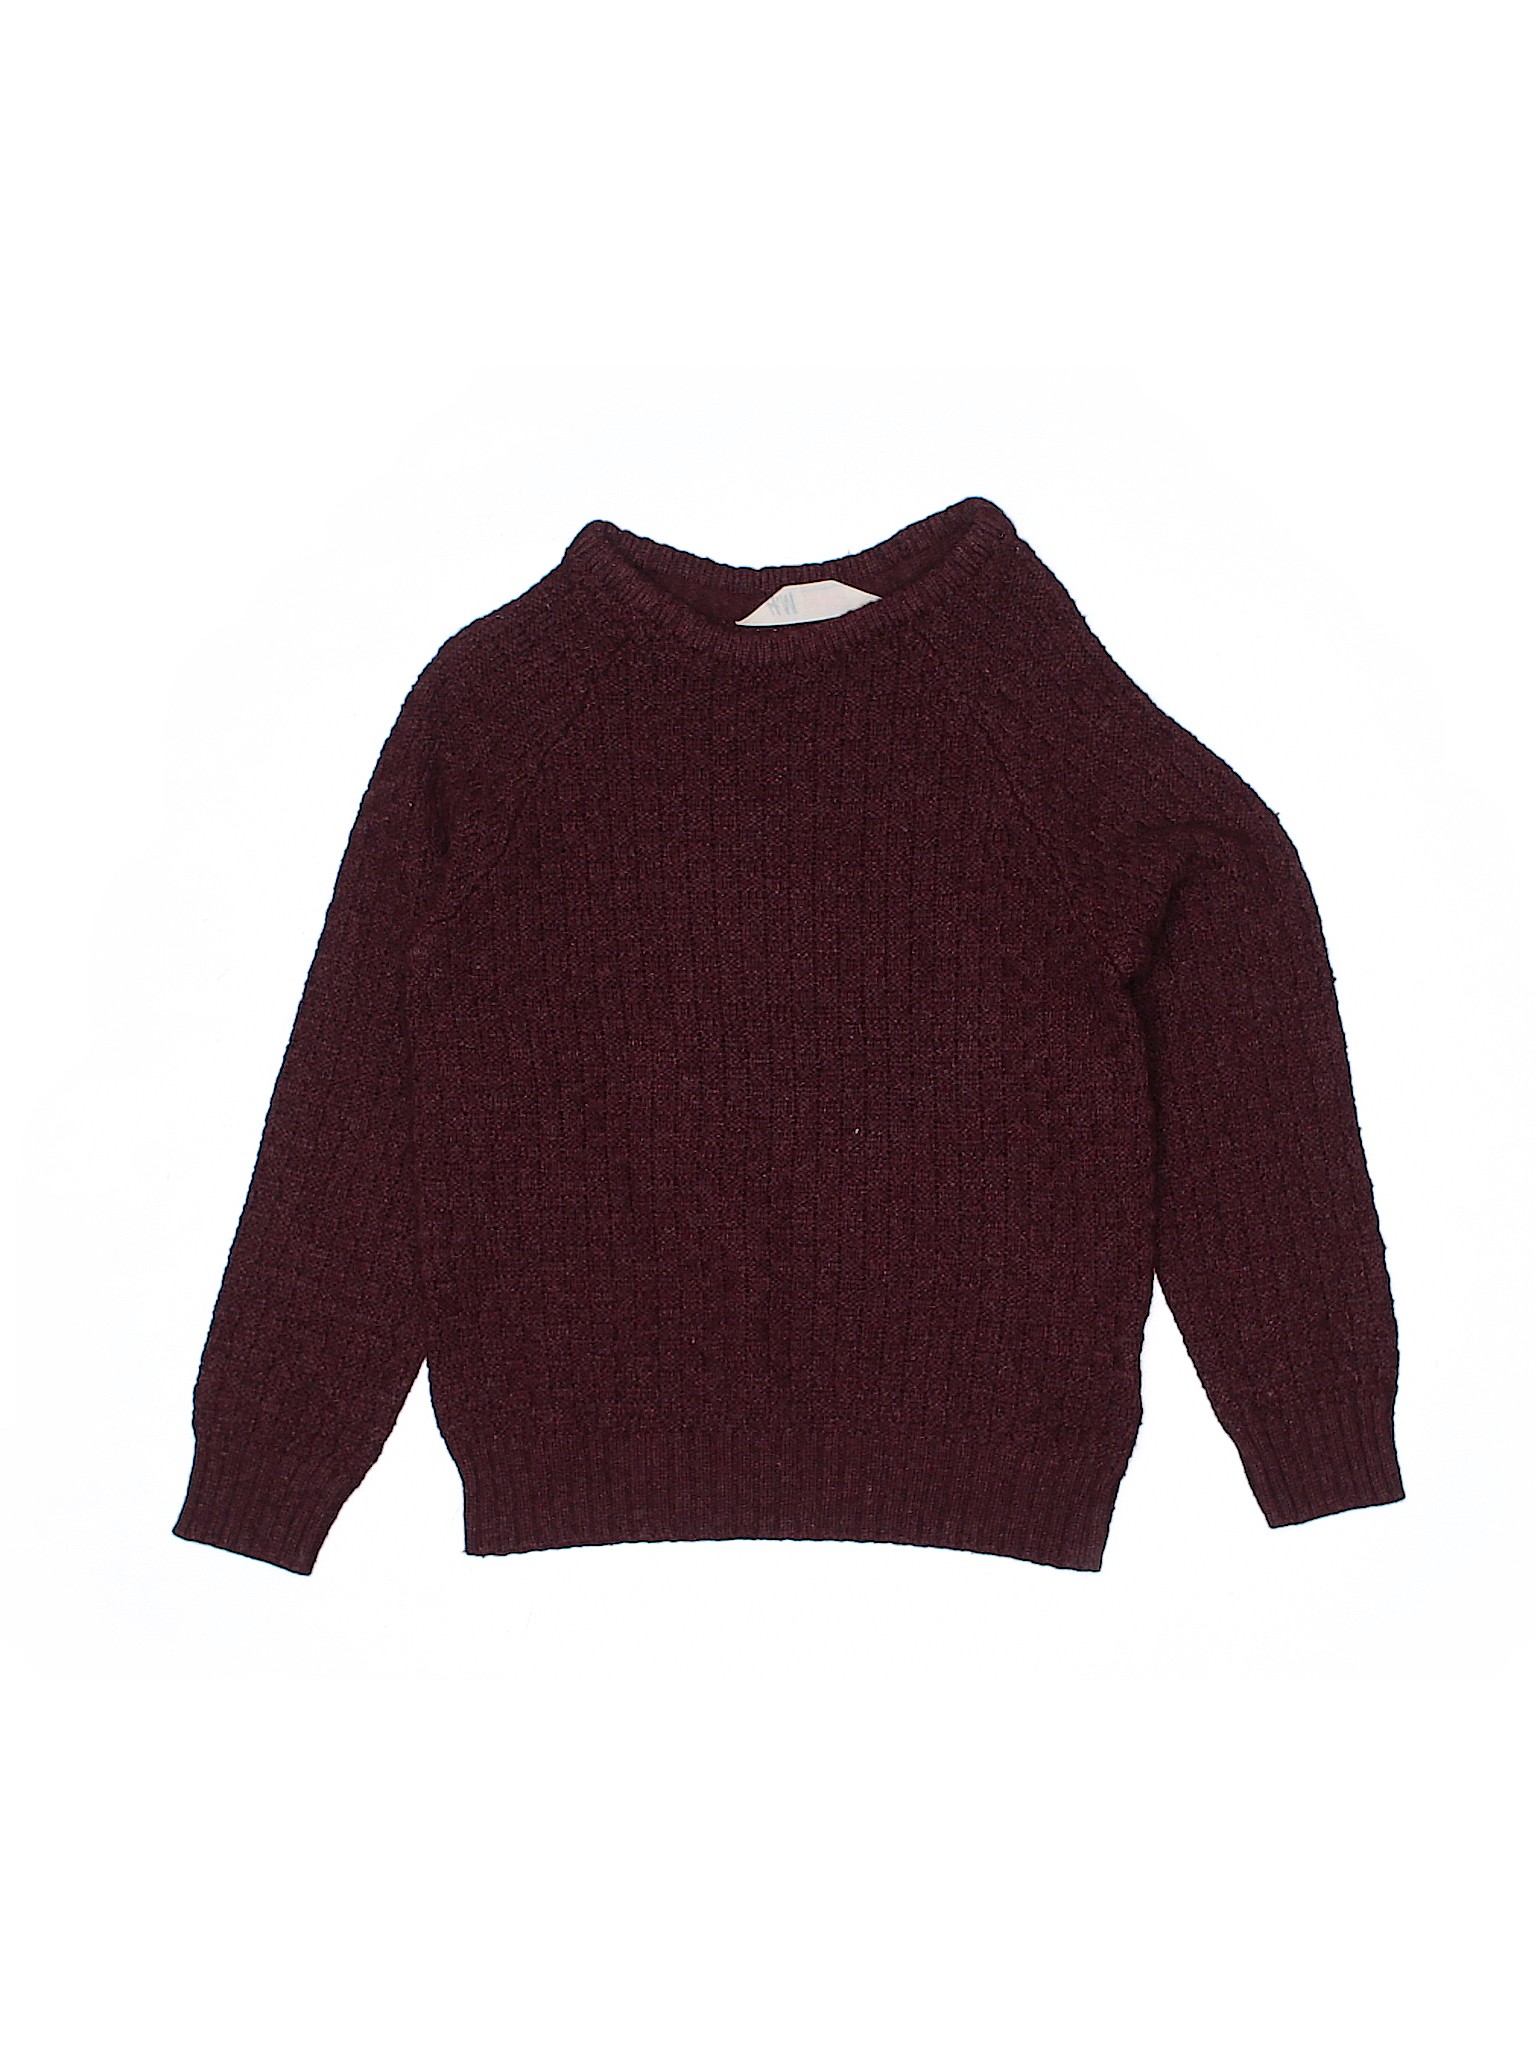 H&M Boys Red Pullover Sweater 4 | eBay